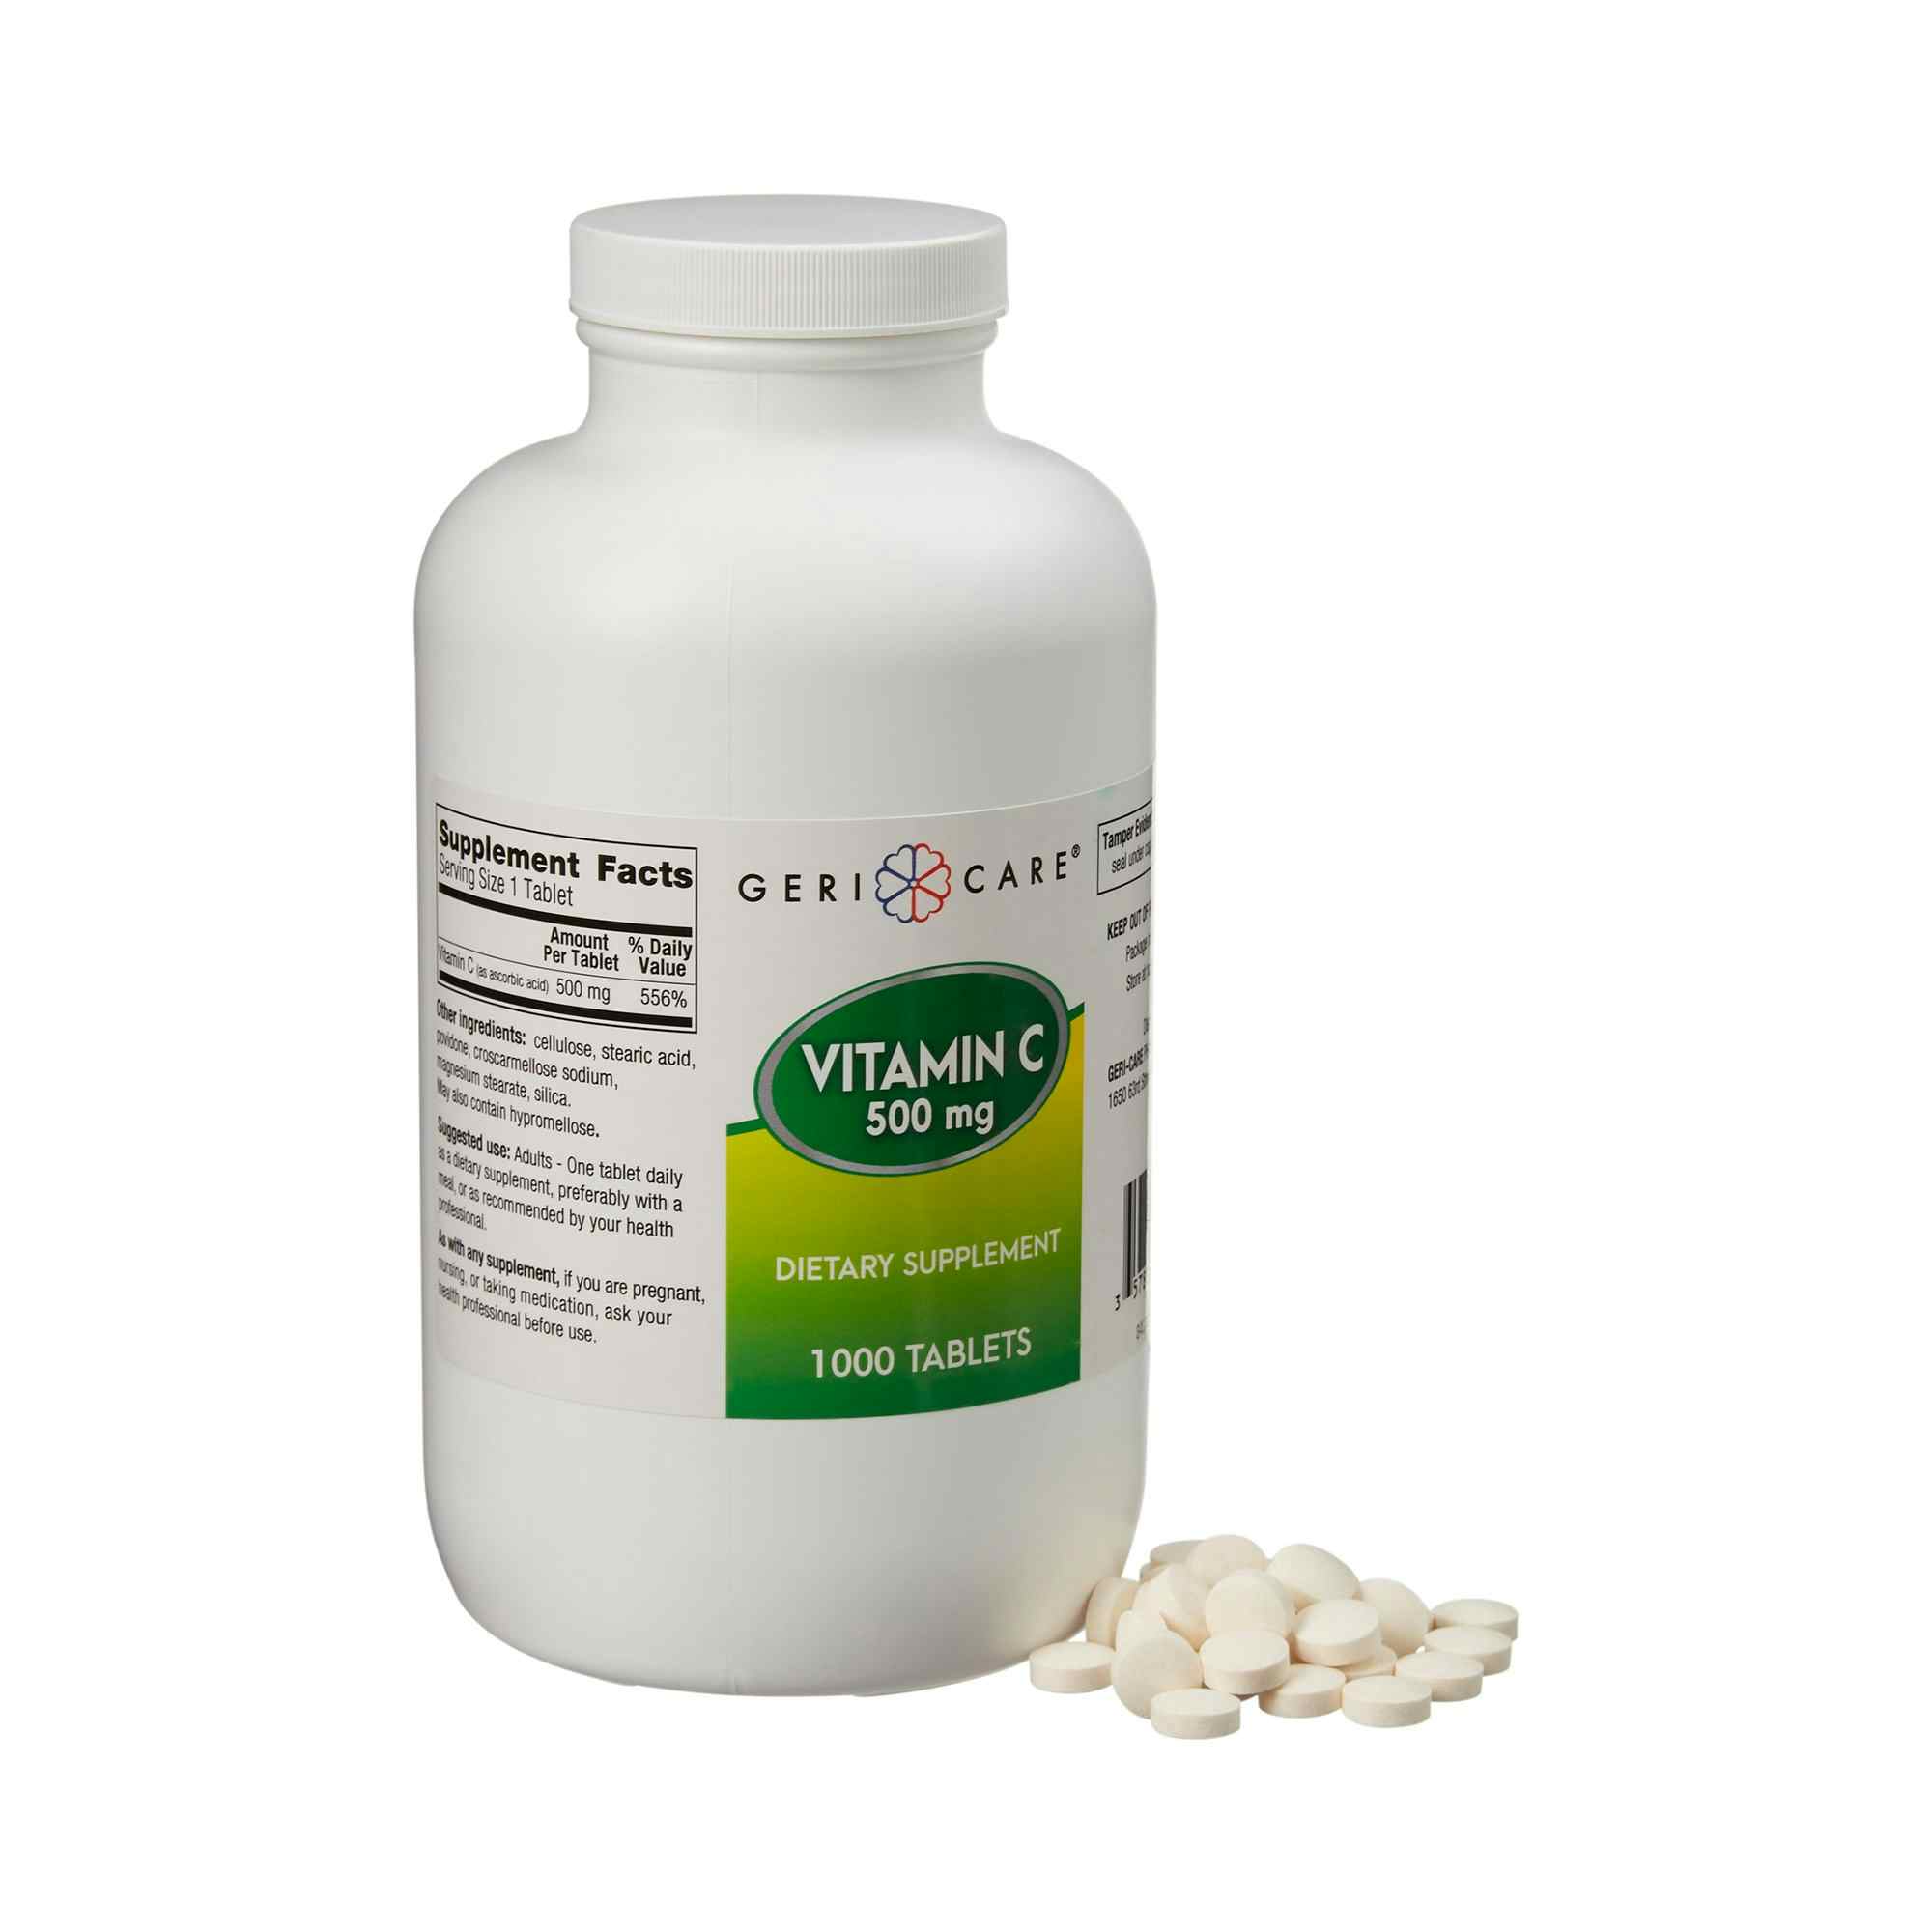 Geri-Care Ascorbic Acid Vitamin C Supplement 500 mg, Tablet, 841-10-GCP, 1000 Tablets - Case of 12 Bottles